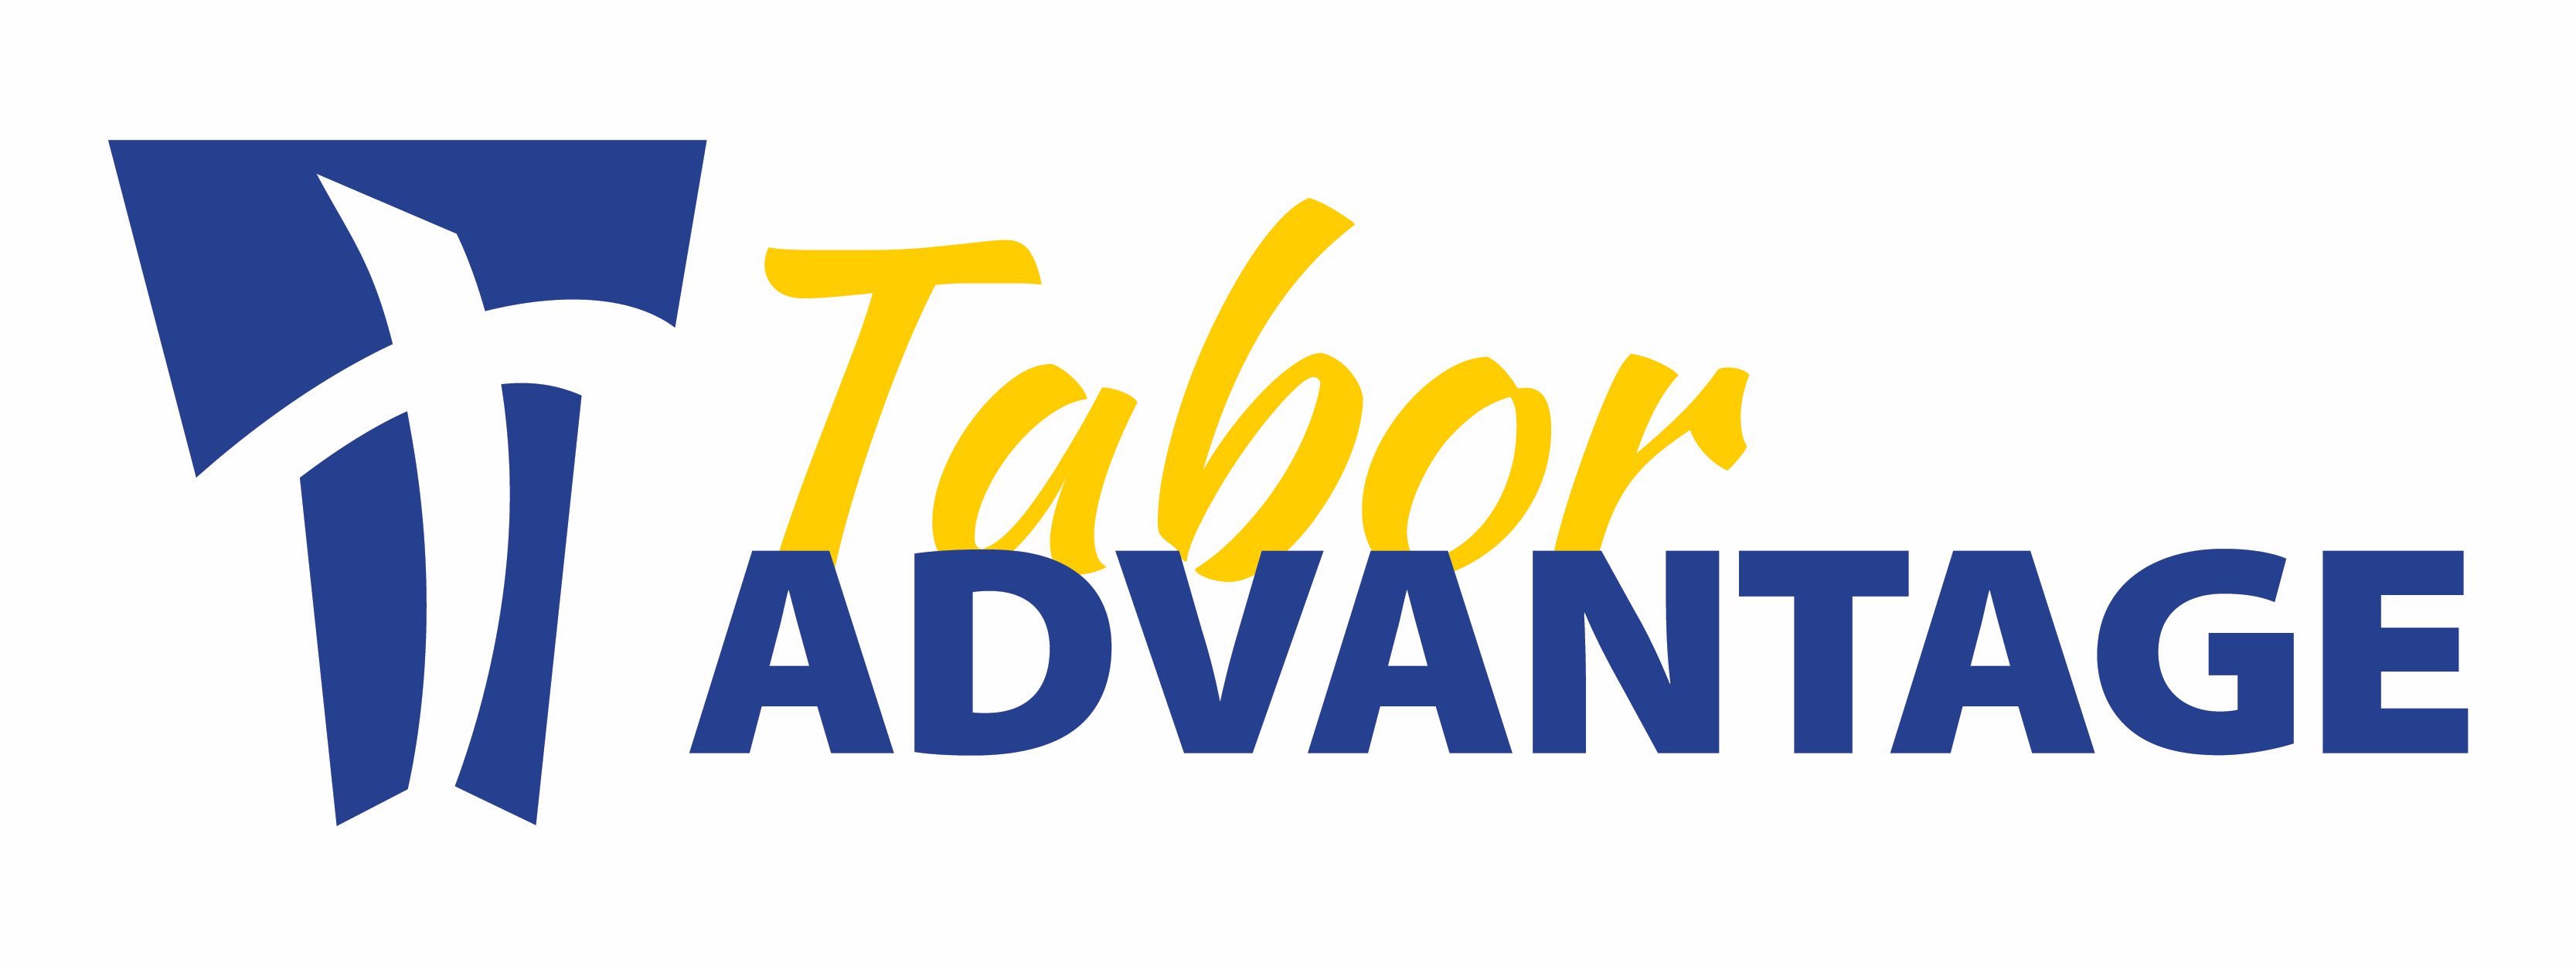 Tabor Advantage